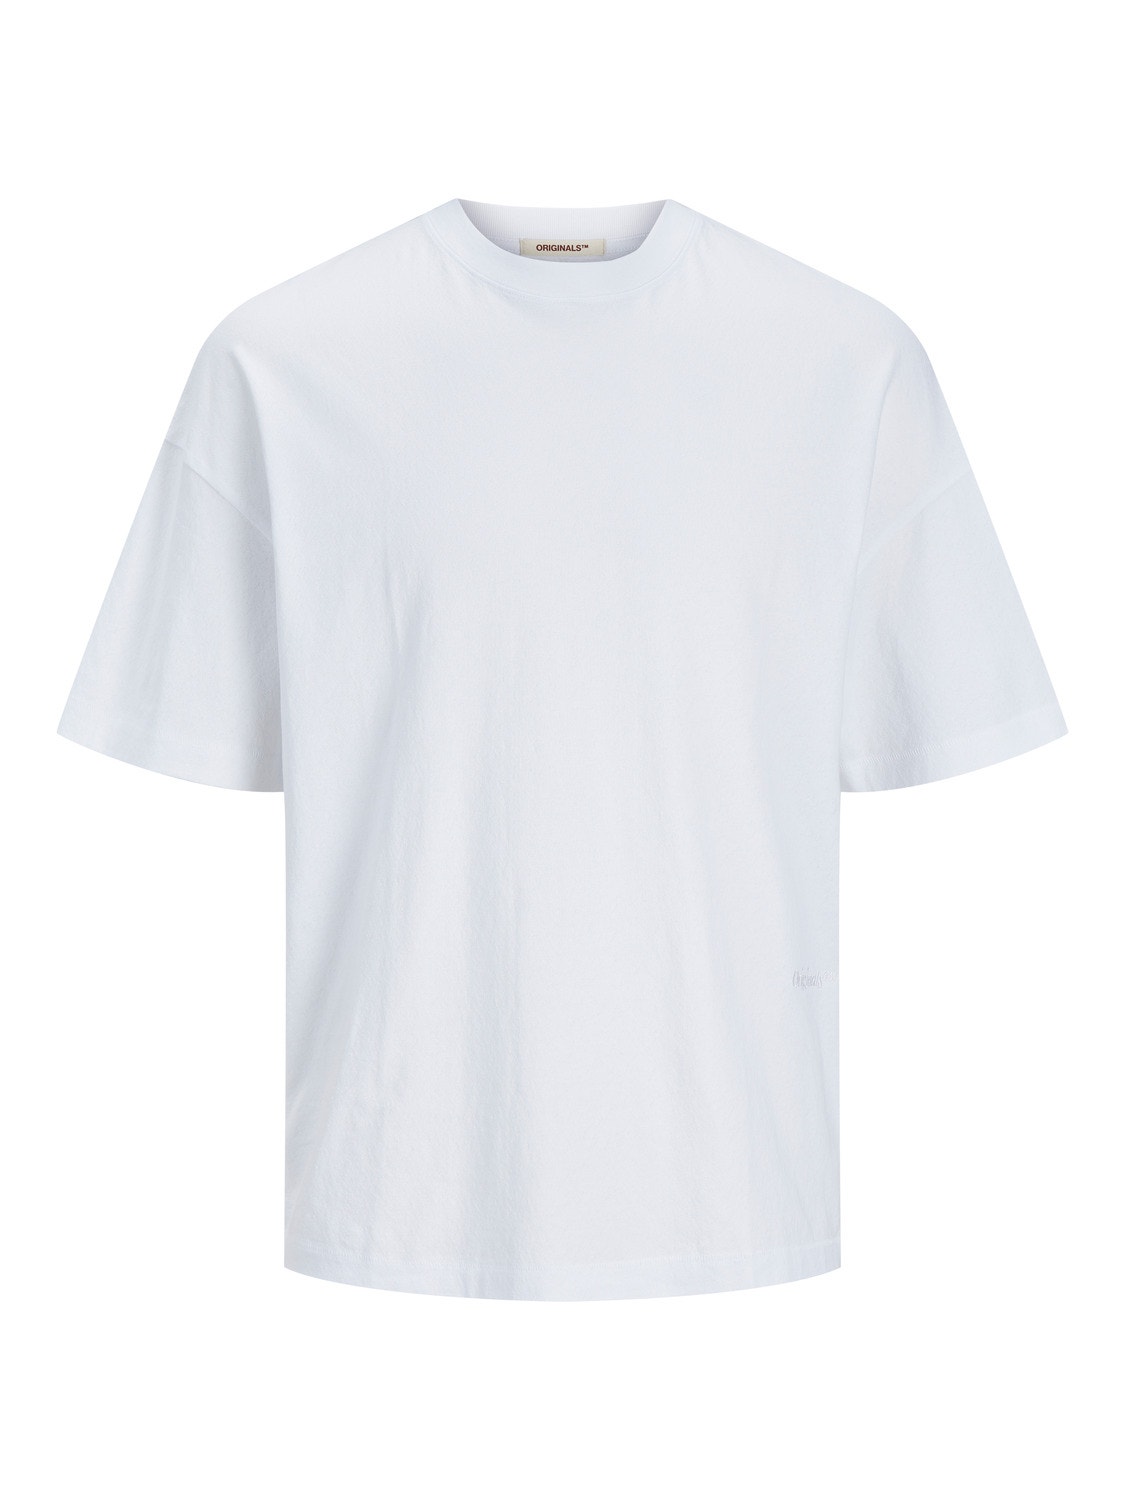 Jack & Jones Oversize Fit Crew neck T-Shirt -Bright White - 12256330